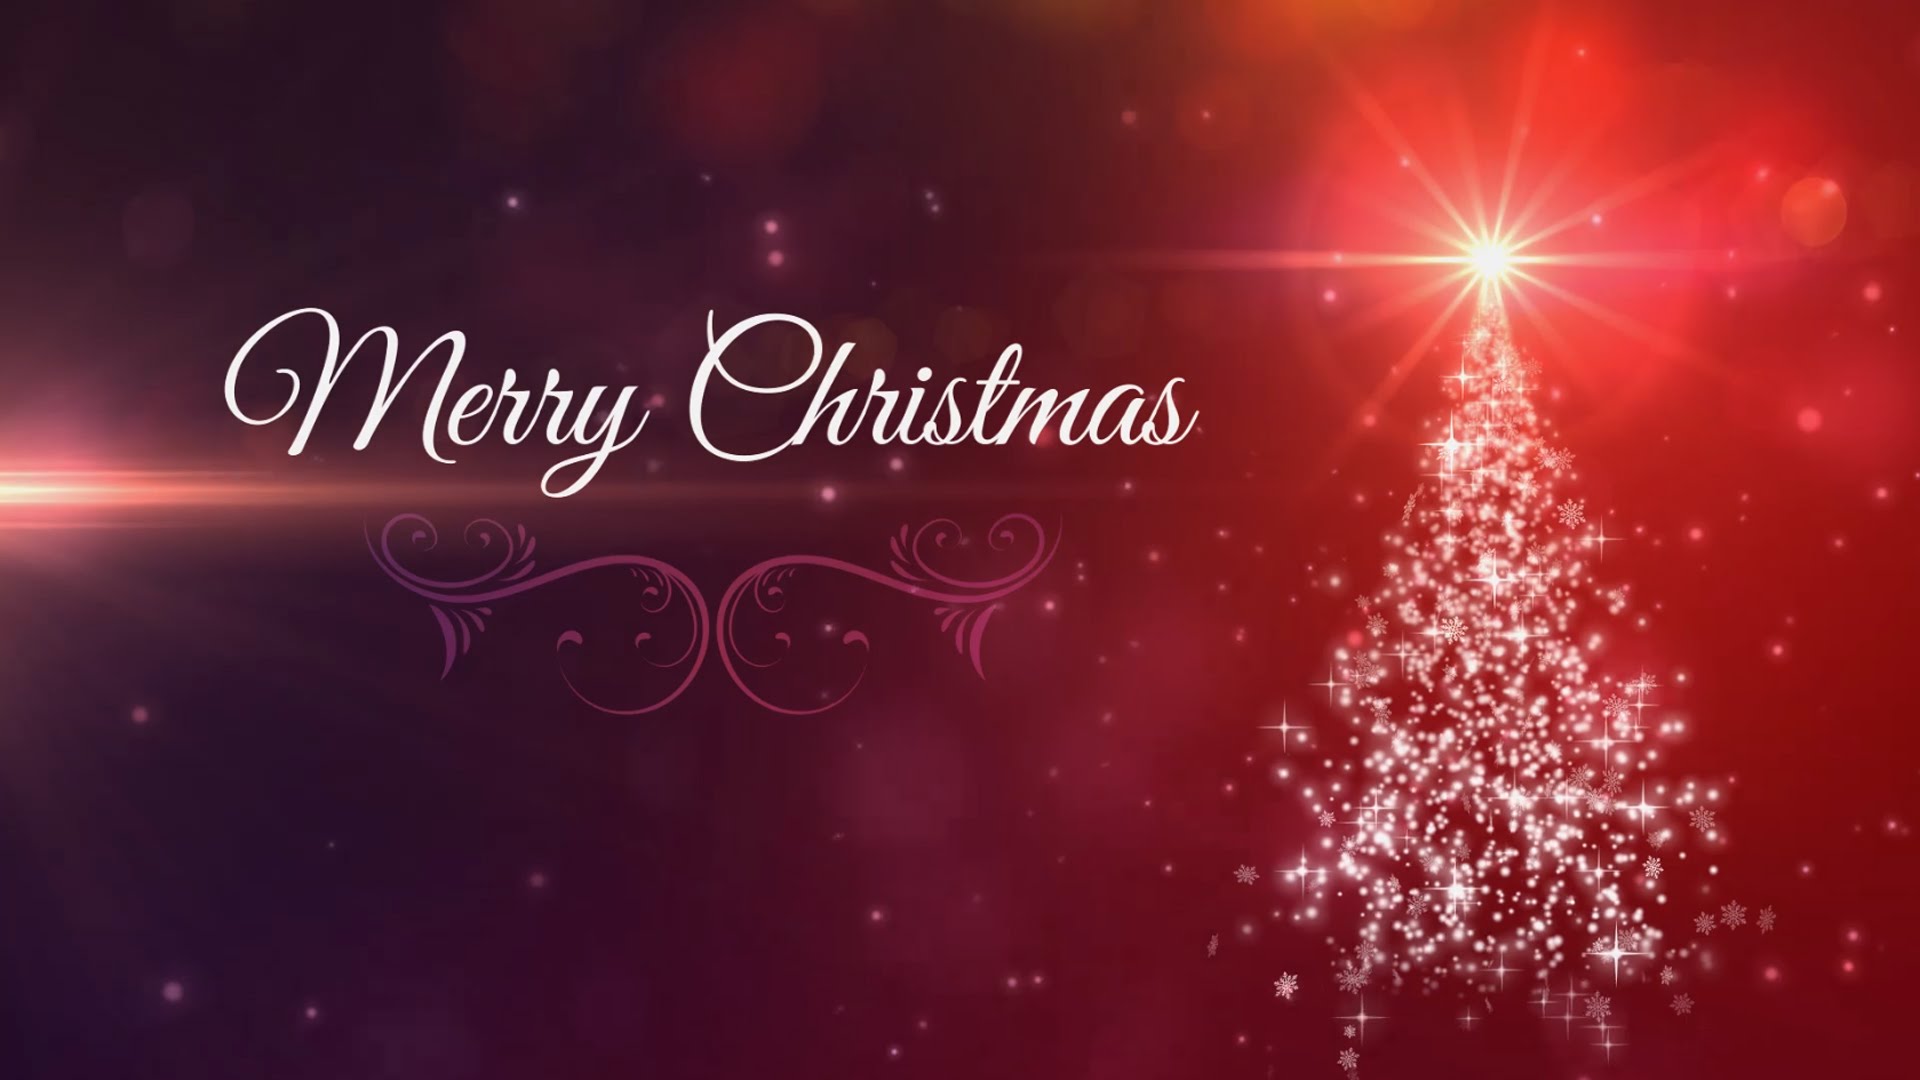 Merry Christmas - Animated Background Loop - Christmas Card - YouTube